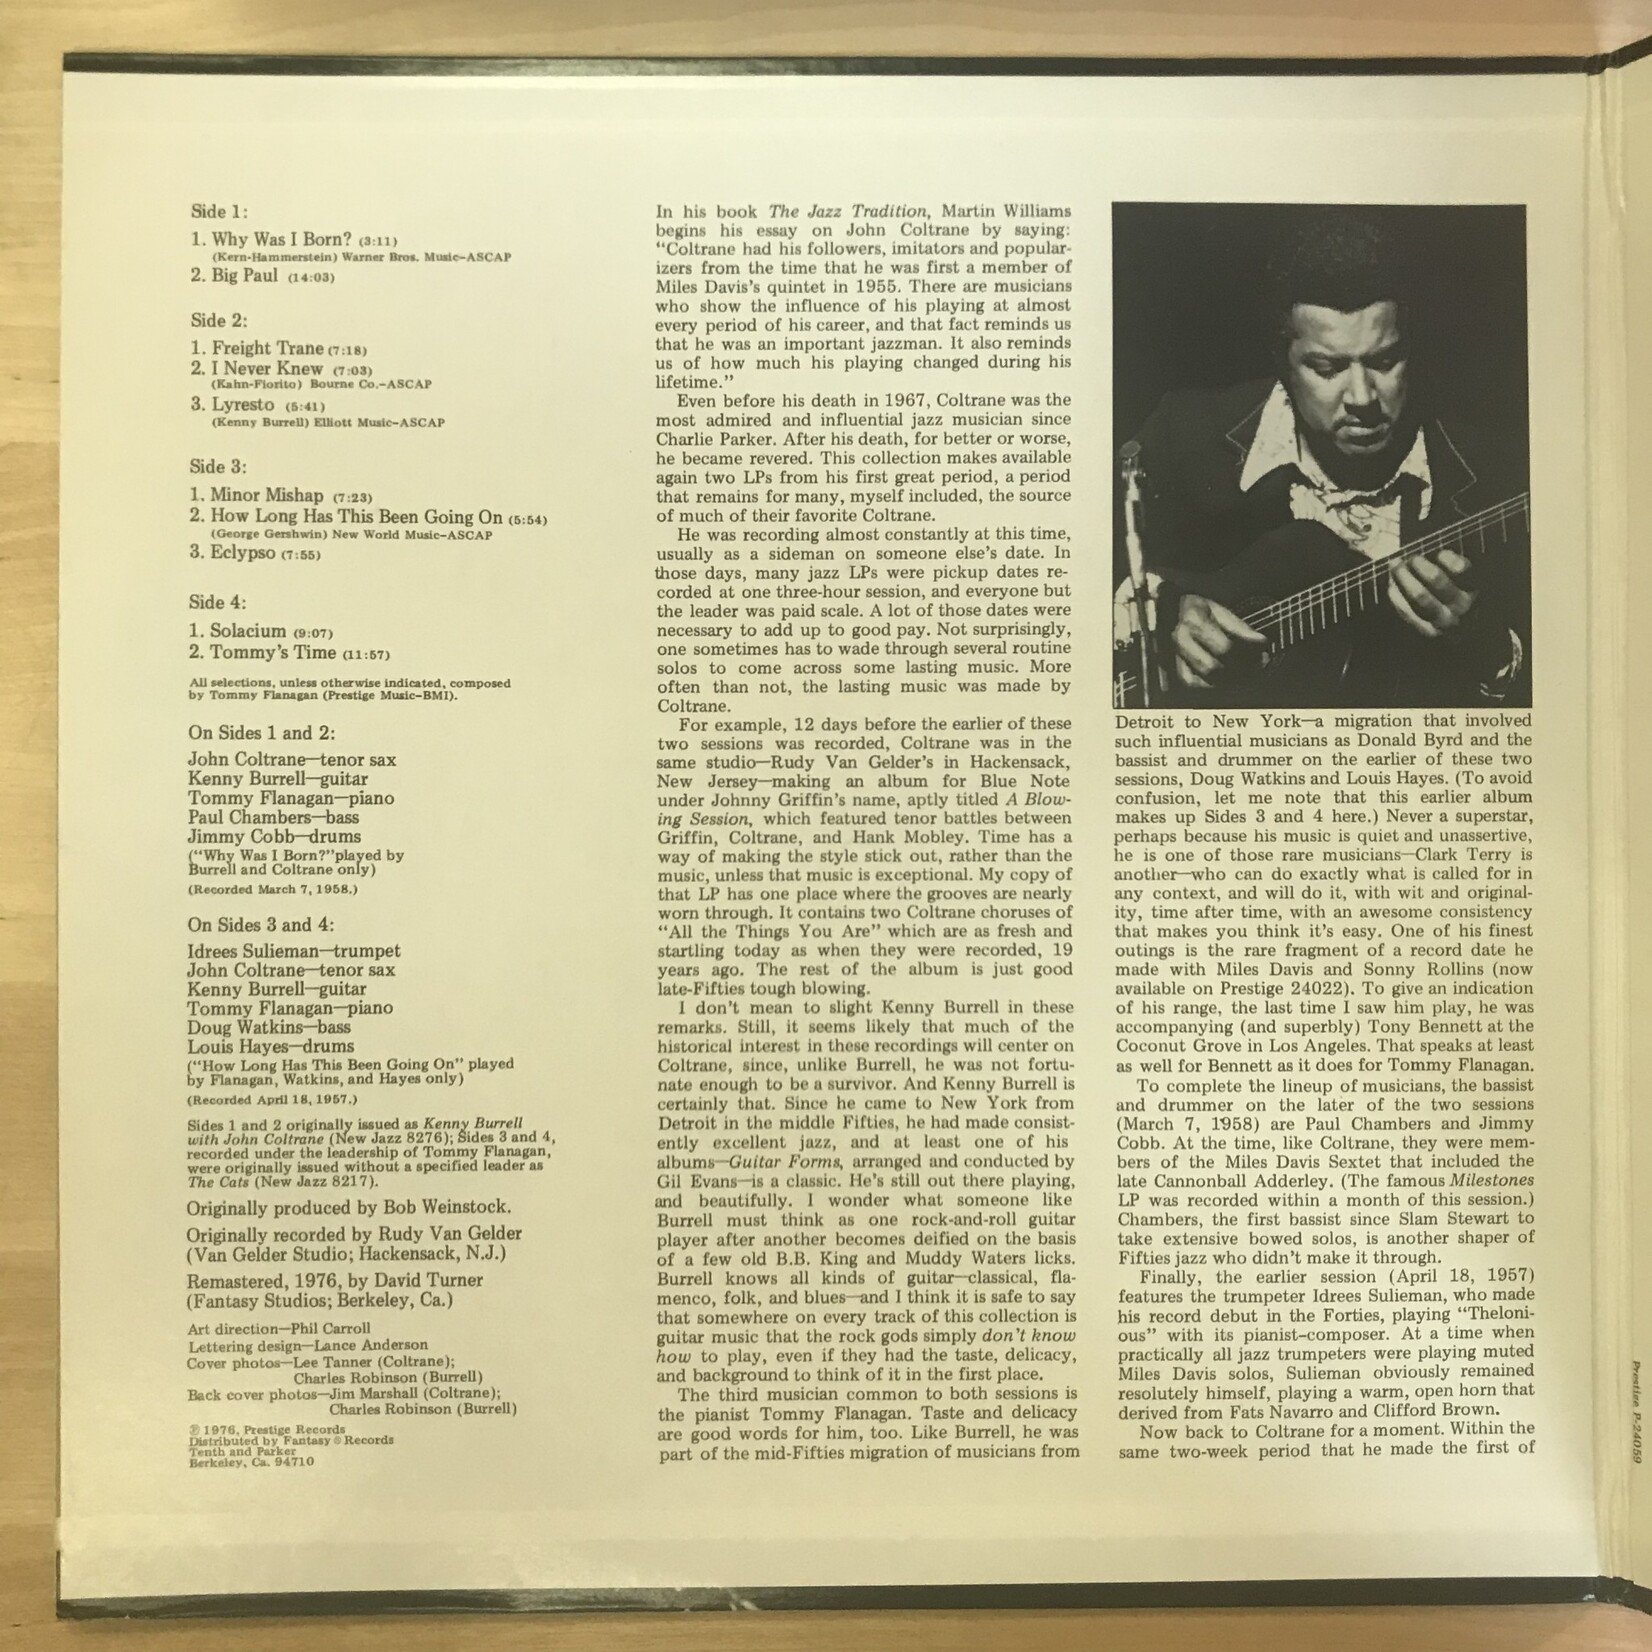 John Coltrane, Kenny Burrell - John Coltrane / Kenny Burrell - P24059 - Vinyl LP (USED)